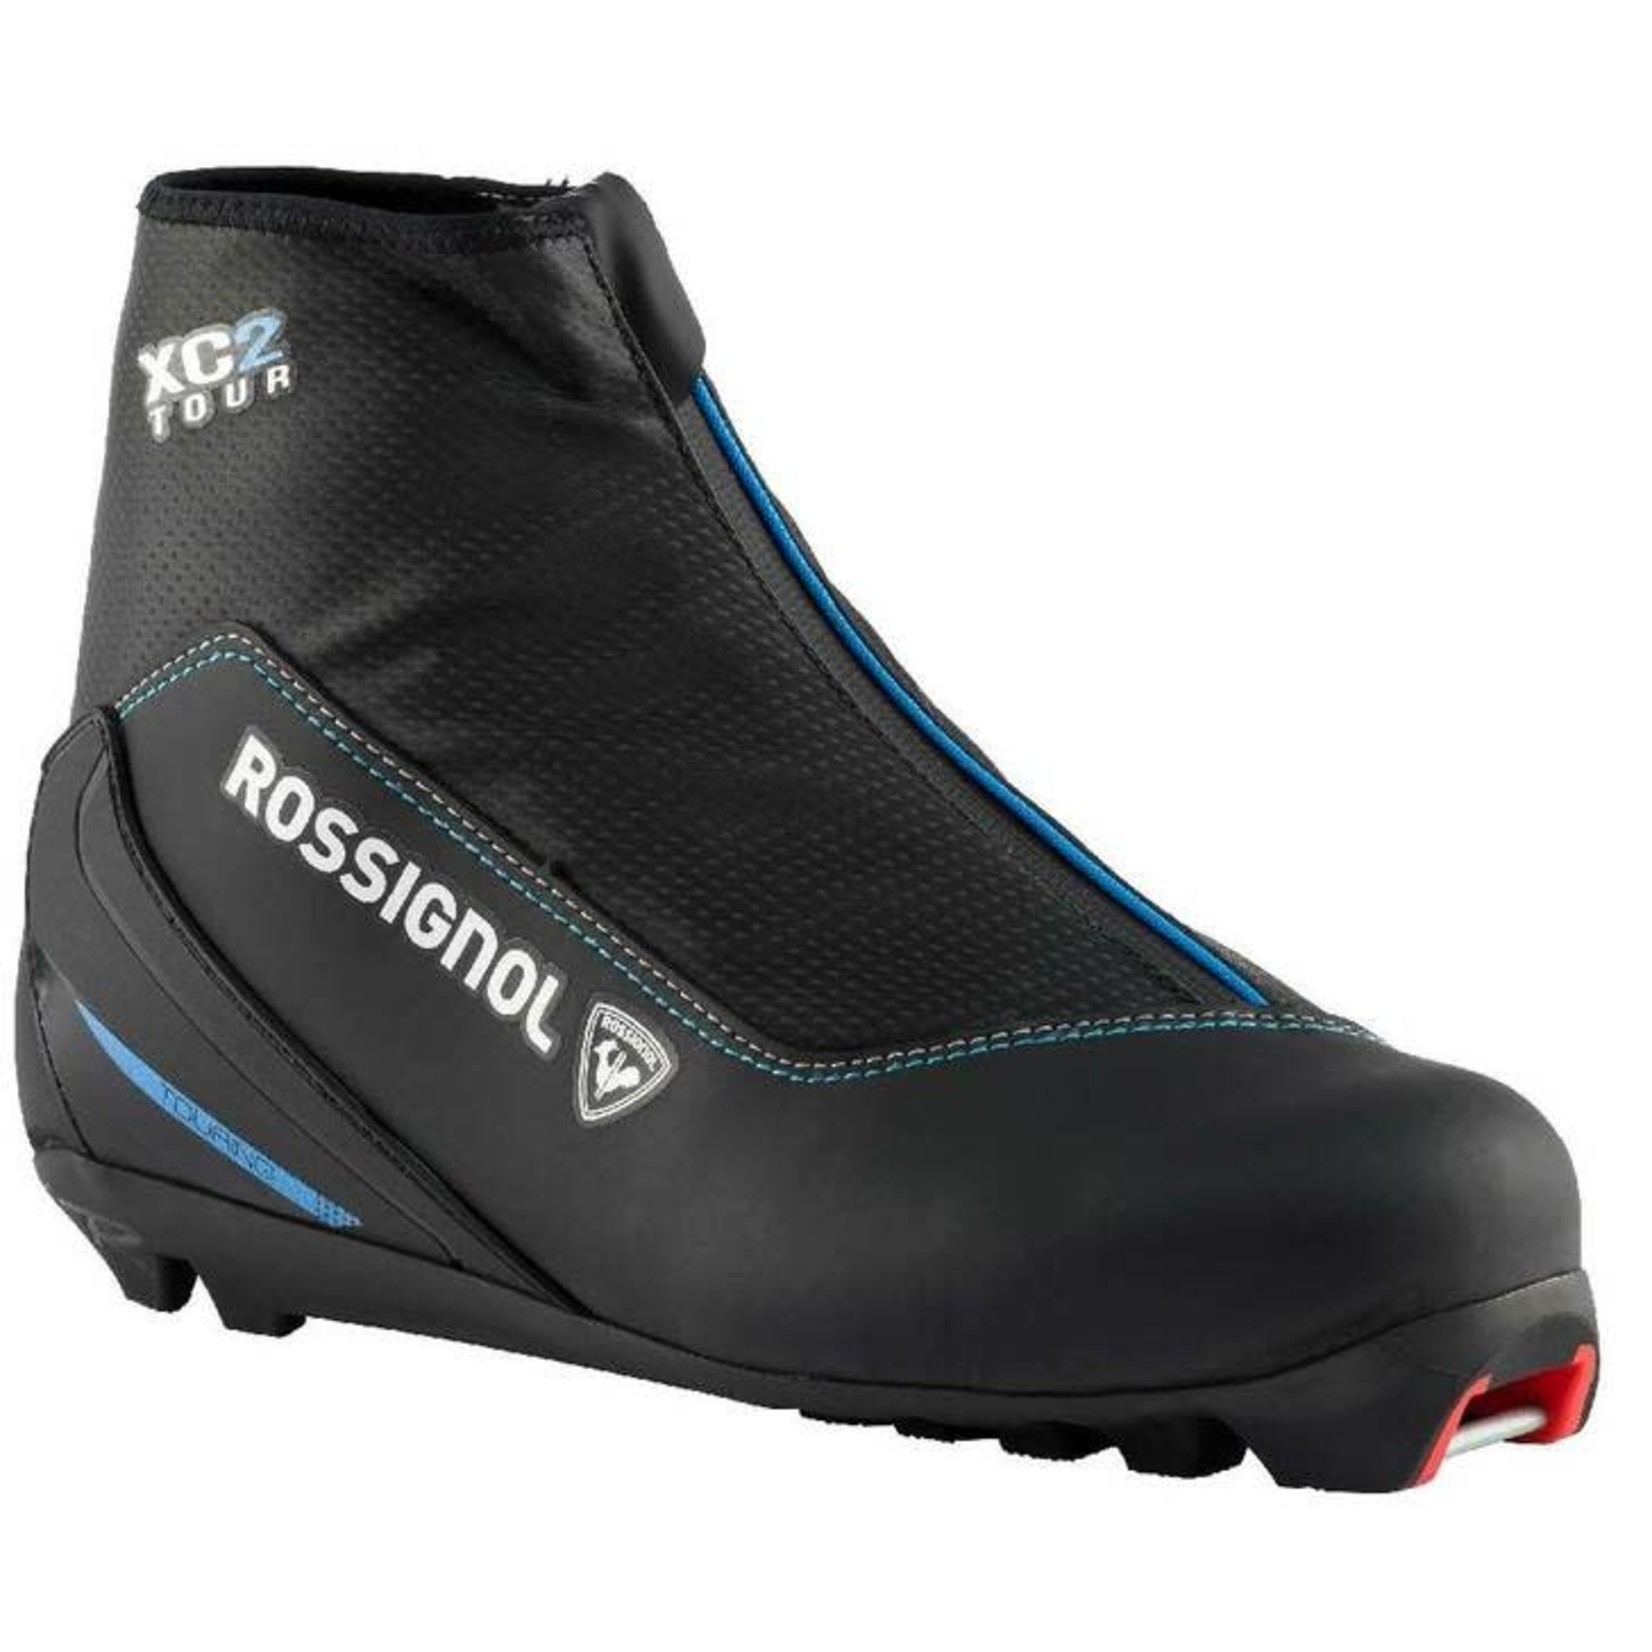 Rossignol Women's Nordic Touring Boots - XC 2 FW